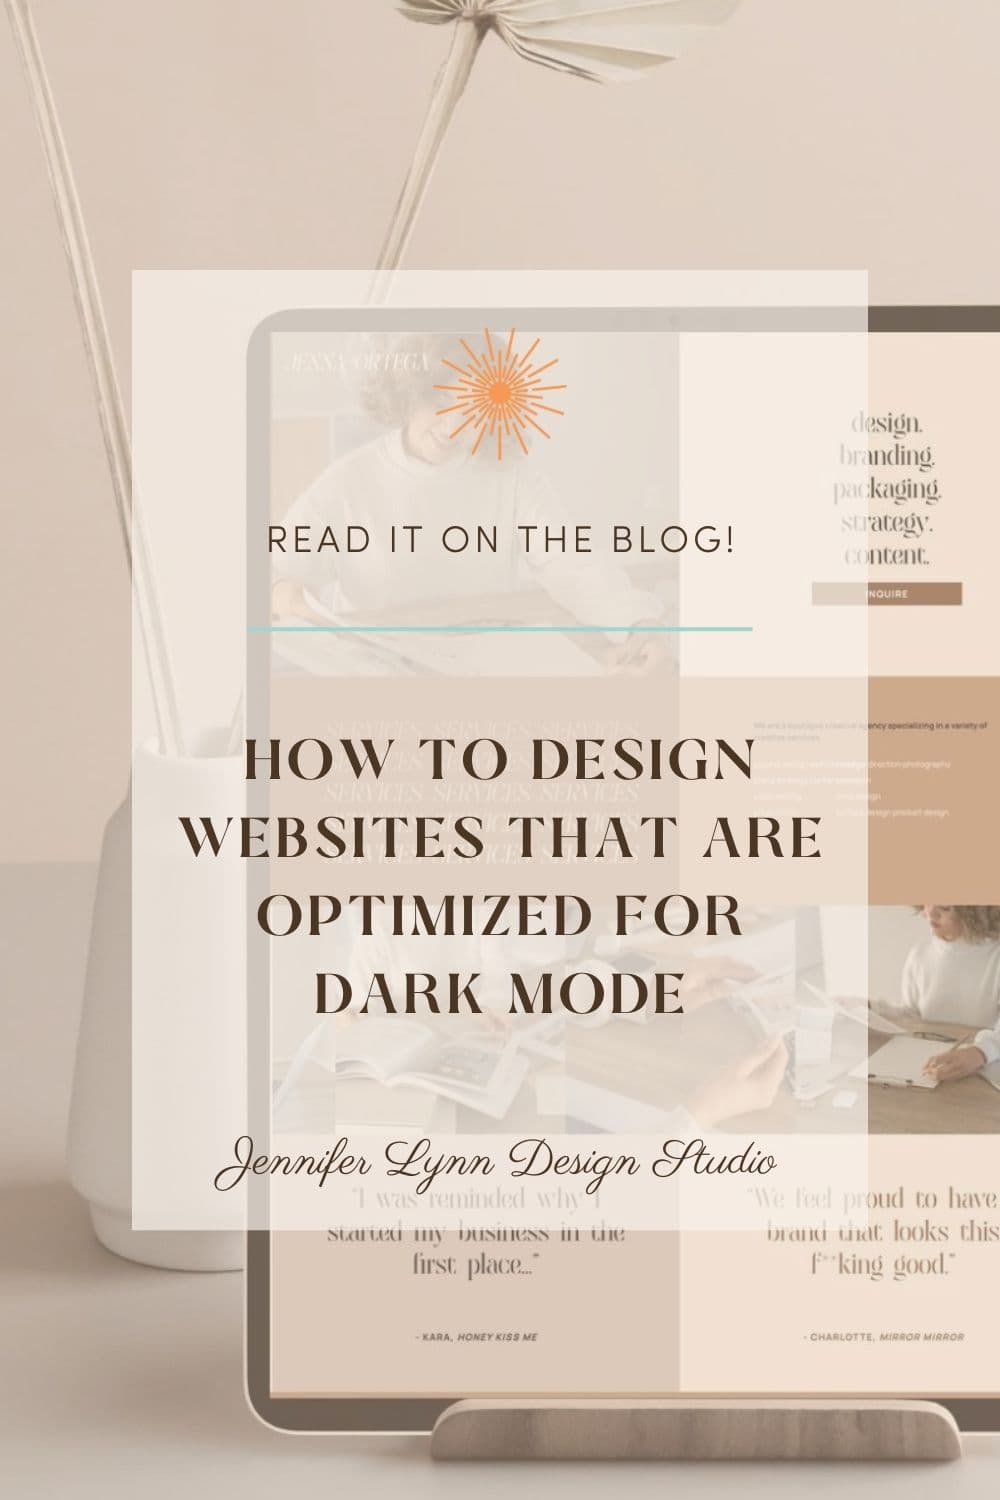 How to Design Websites that are Optimized for Dark Mode by Jennifer Lynn Design Studio